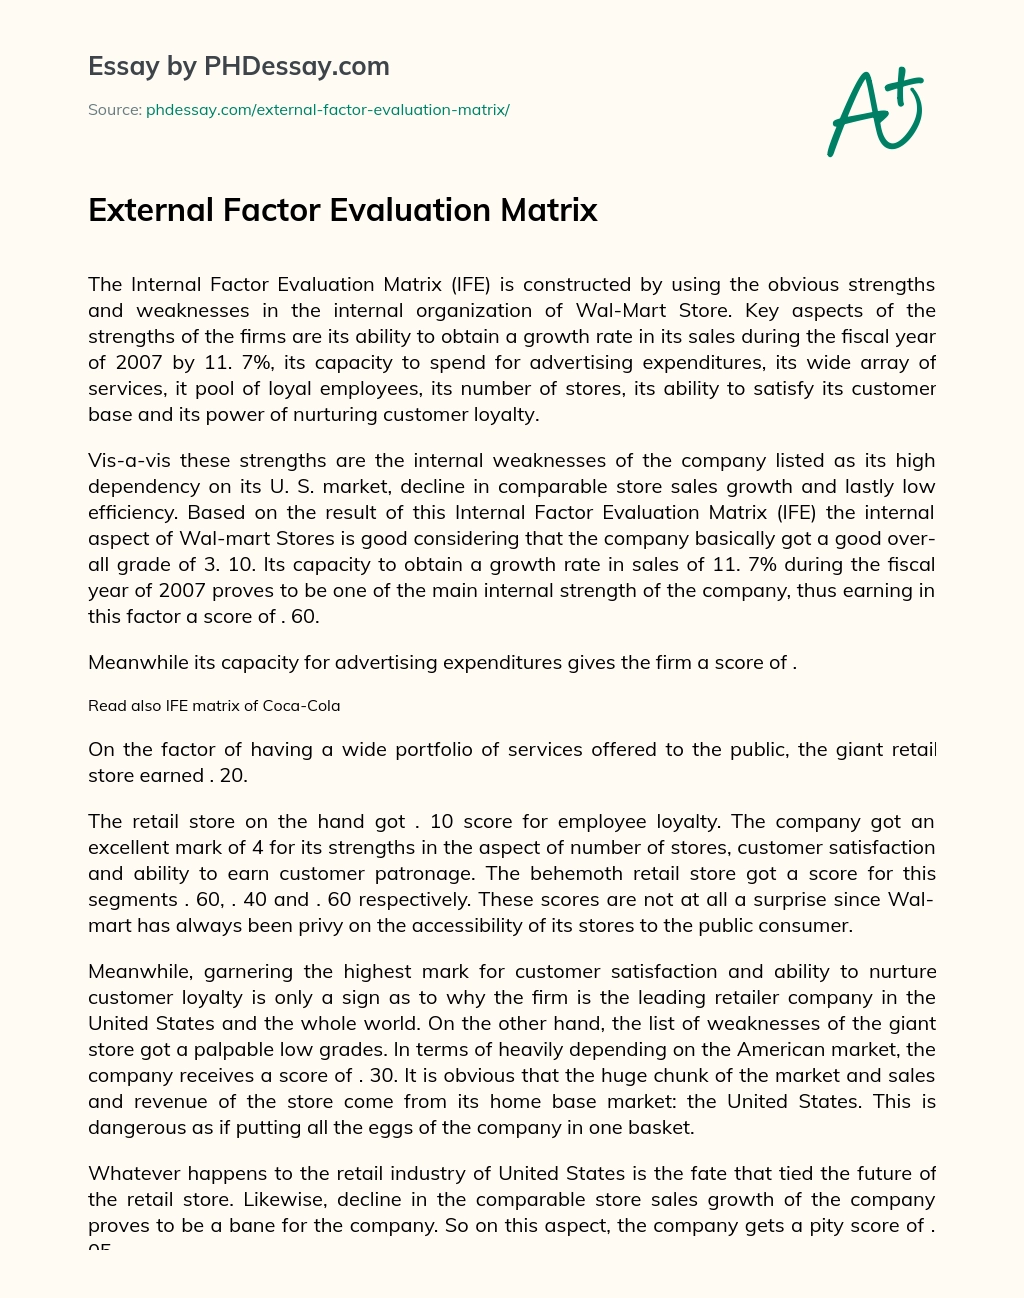 External Factor Evaluation Matrix essay